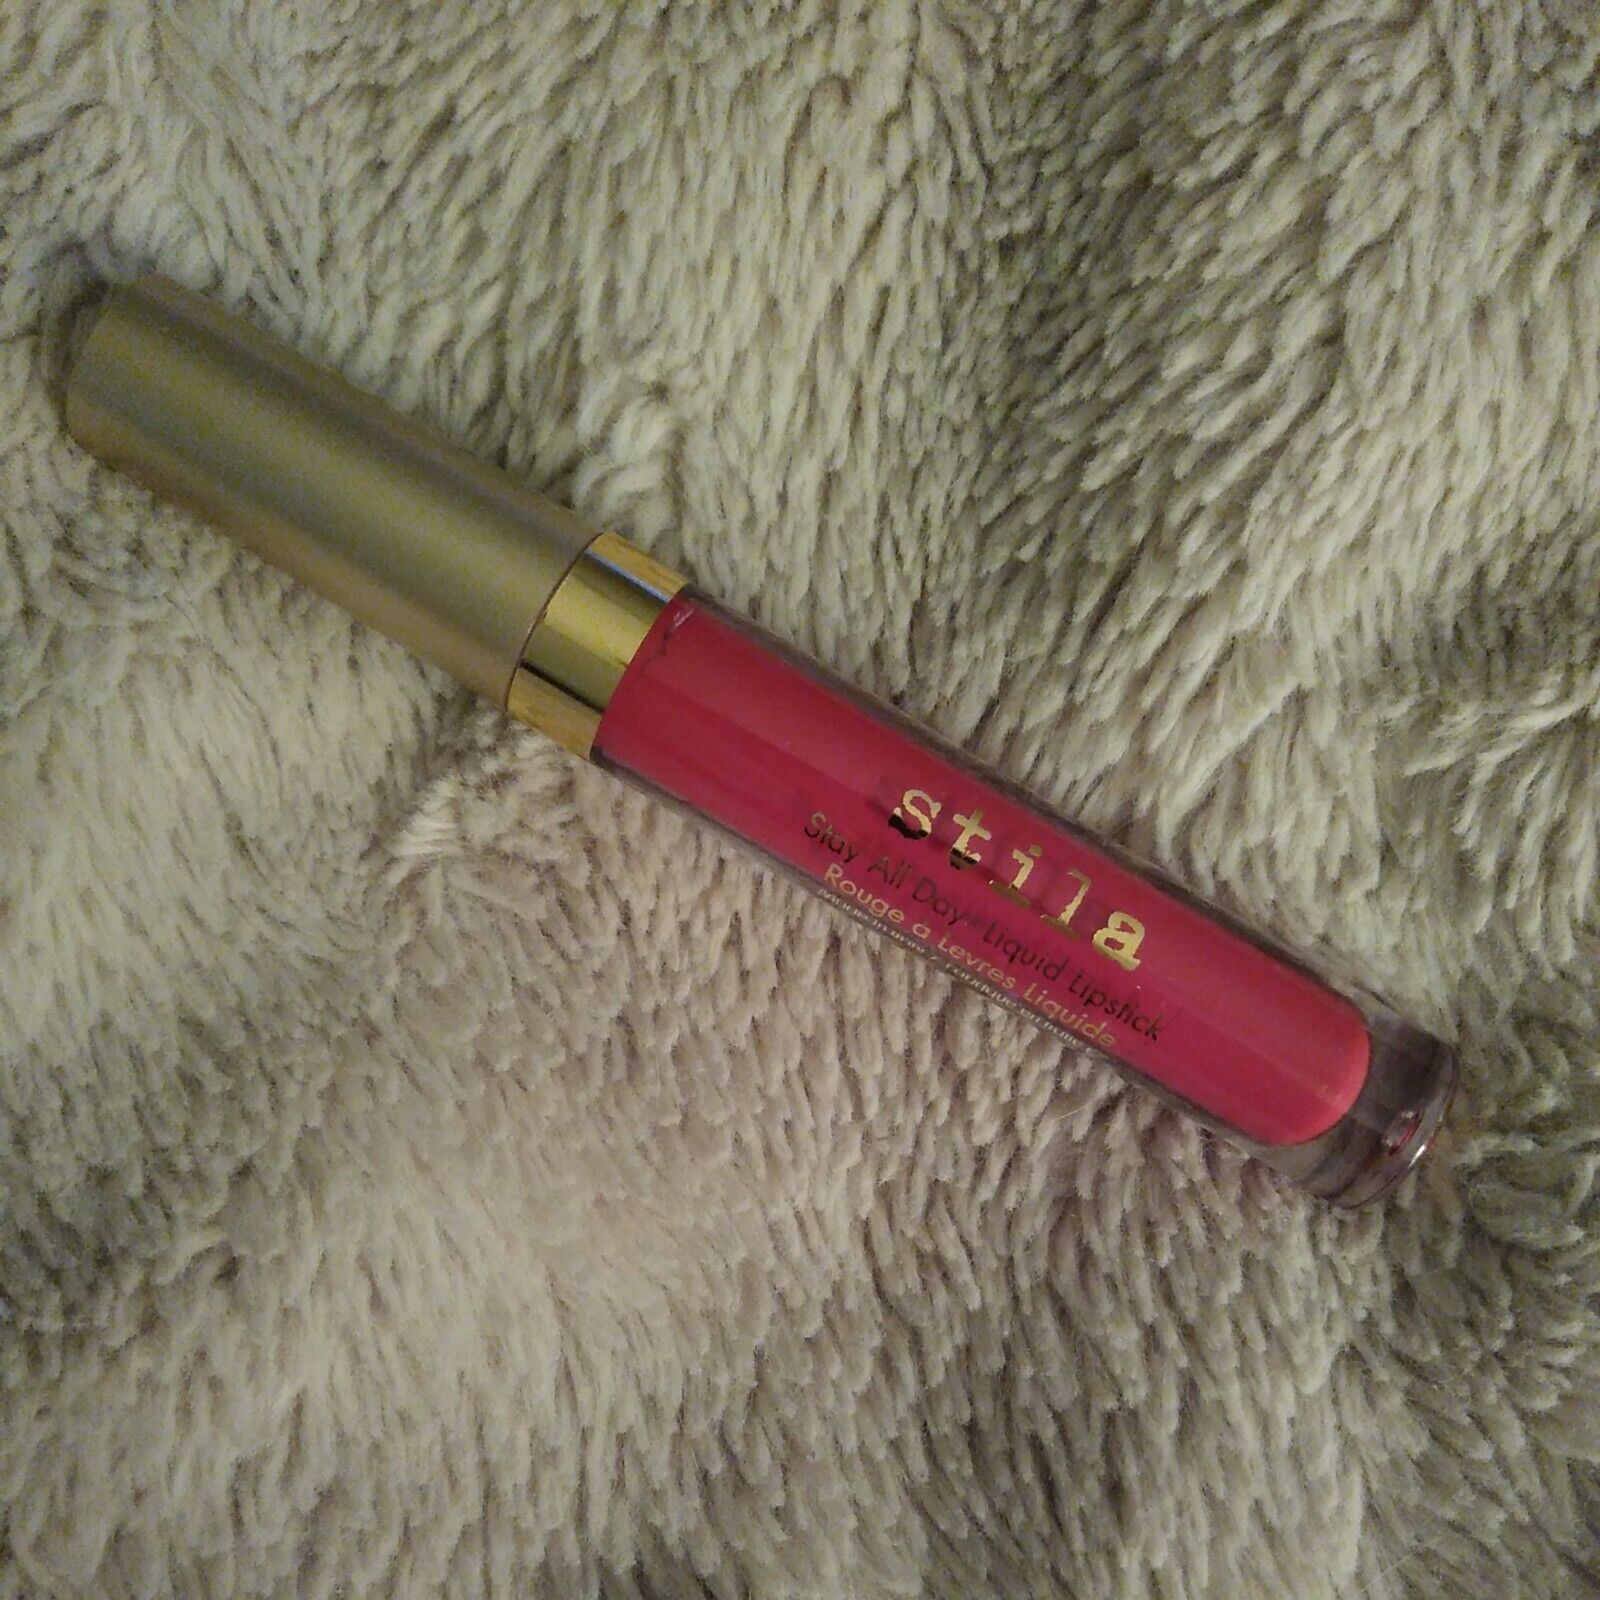 Stila Stay All Day Liquid Lipstick Beso - Full size & Fast Shipping - L@@K!!!!